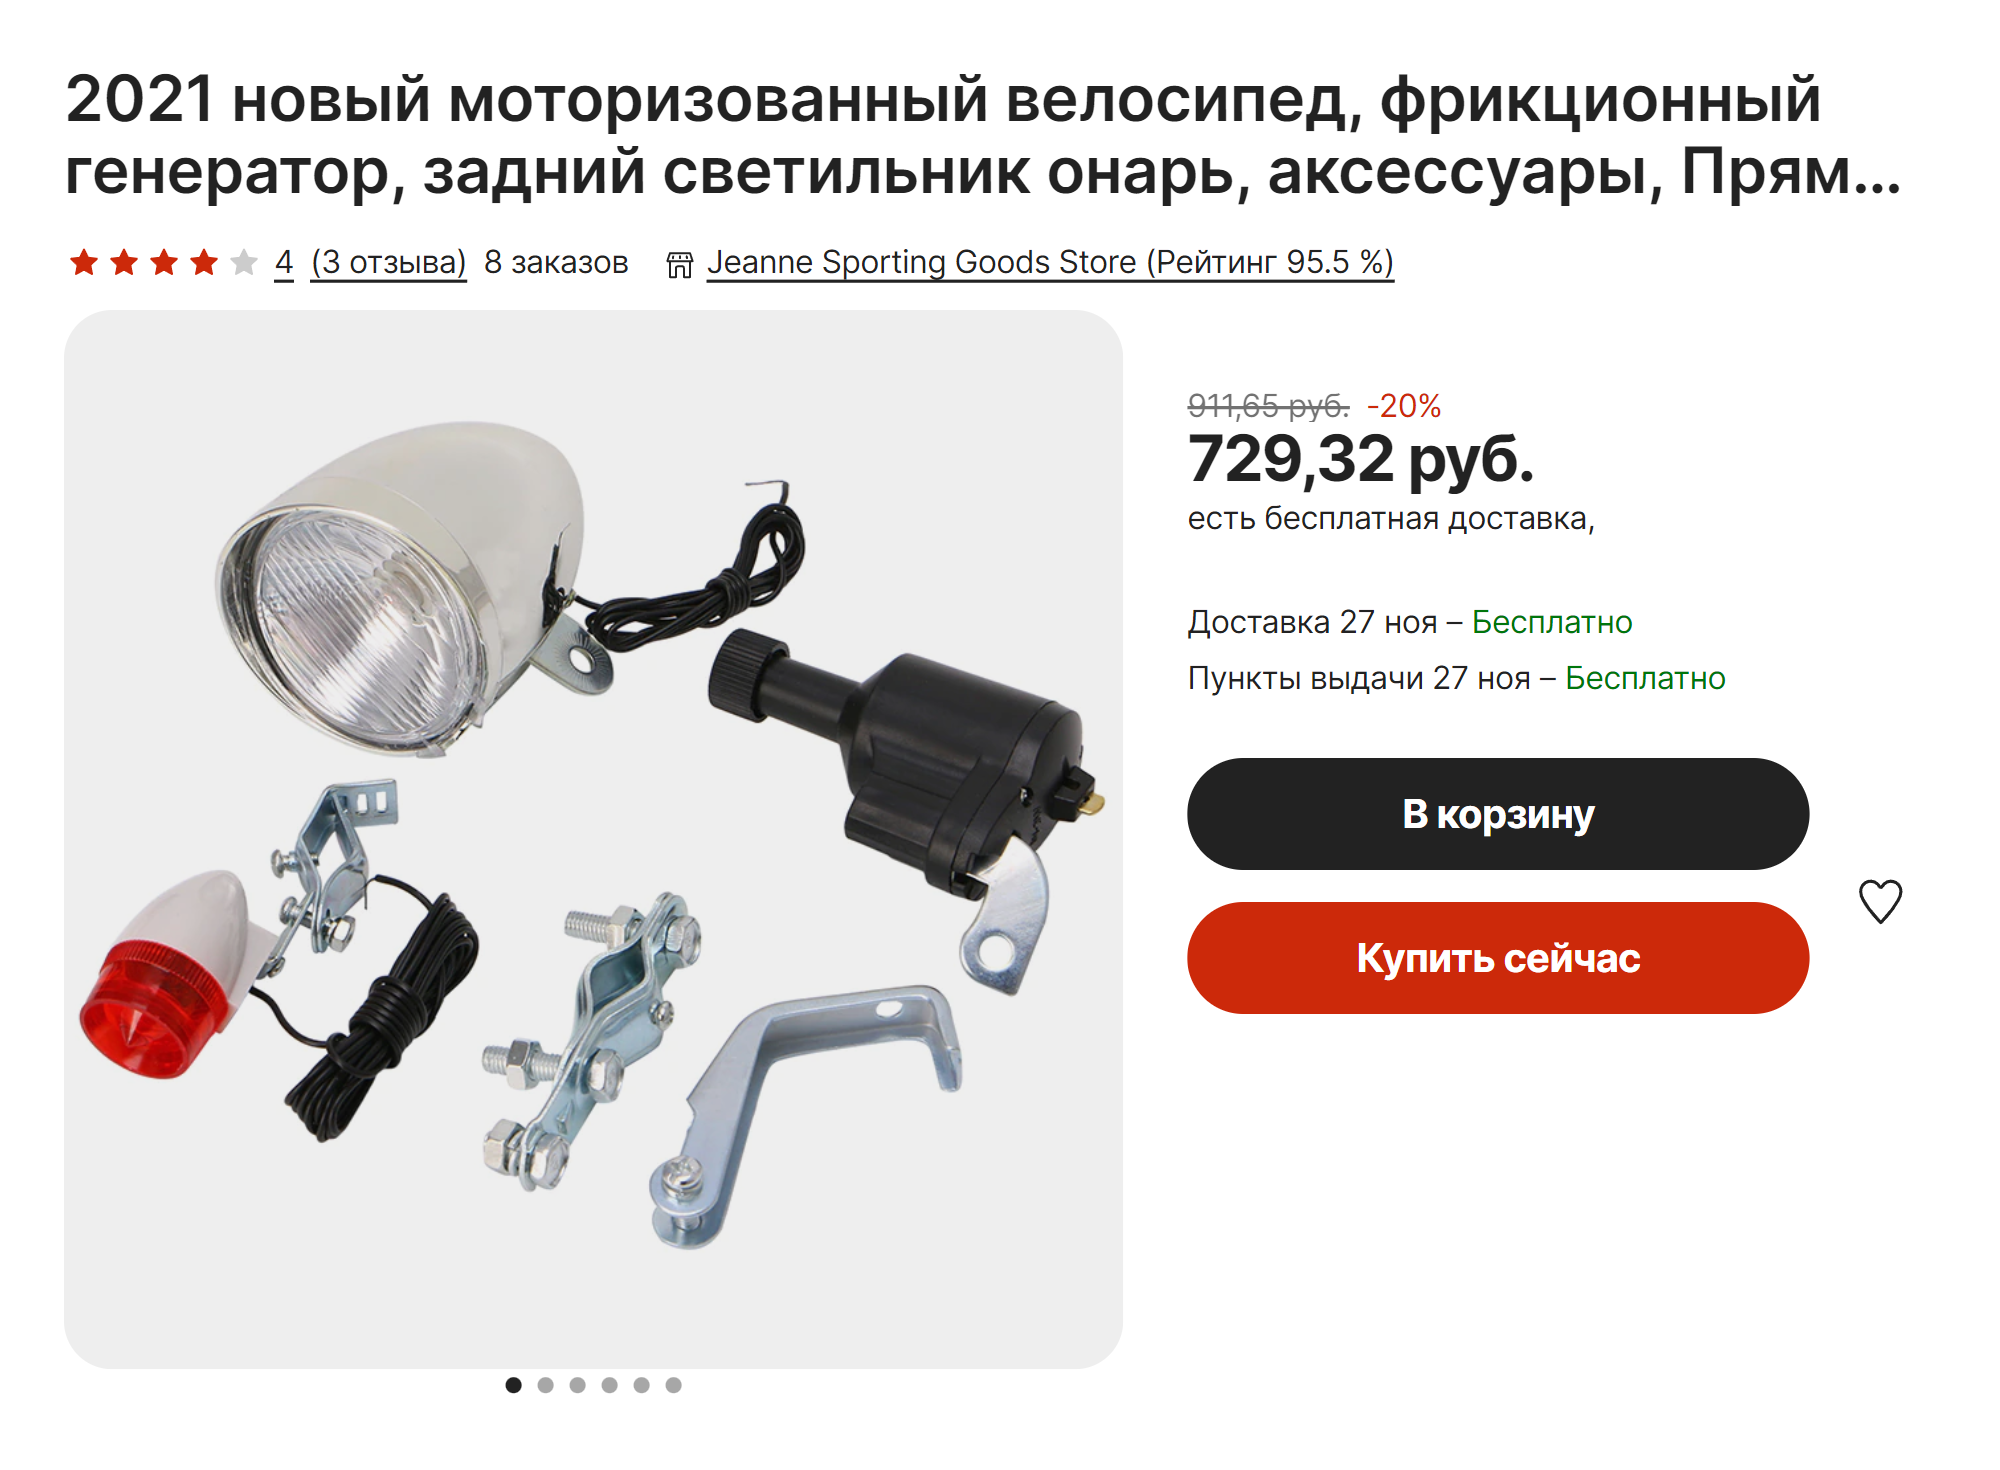 Можно найти неплохие динамо⁠-⁠фонари до 1000 ₽. Источник: aliexpress.ru